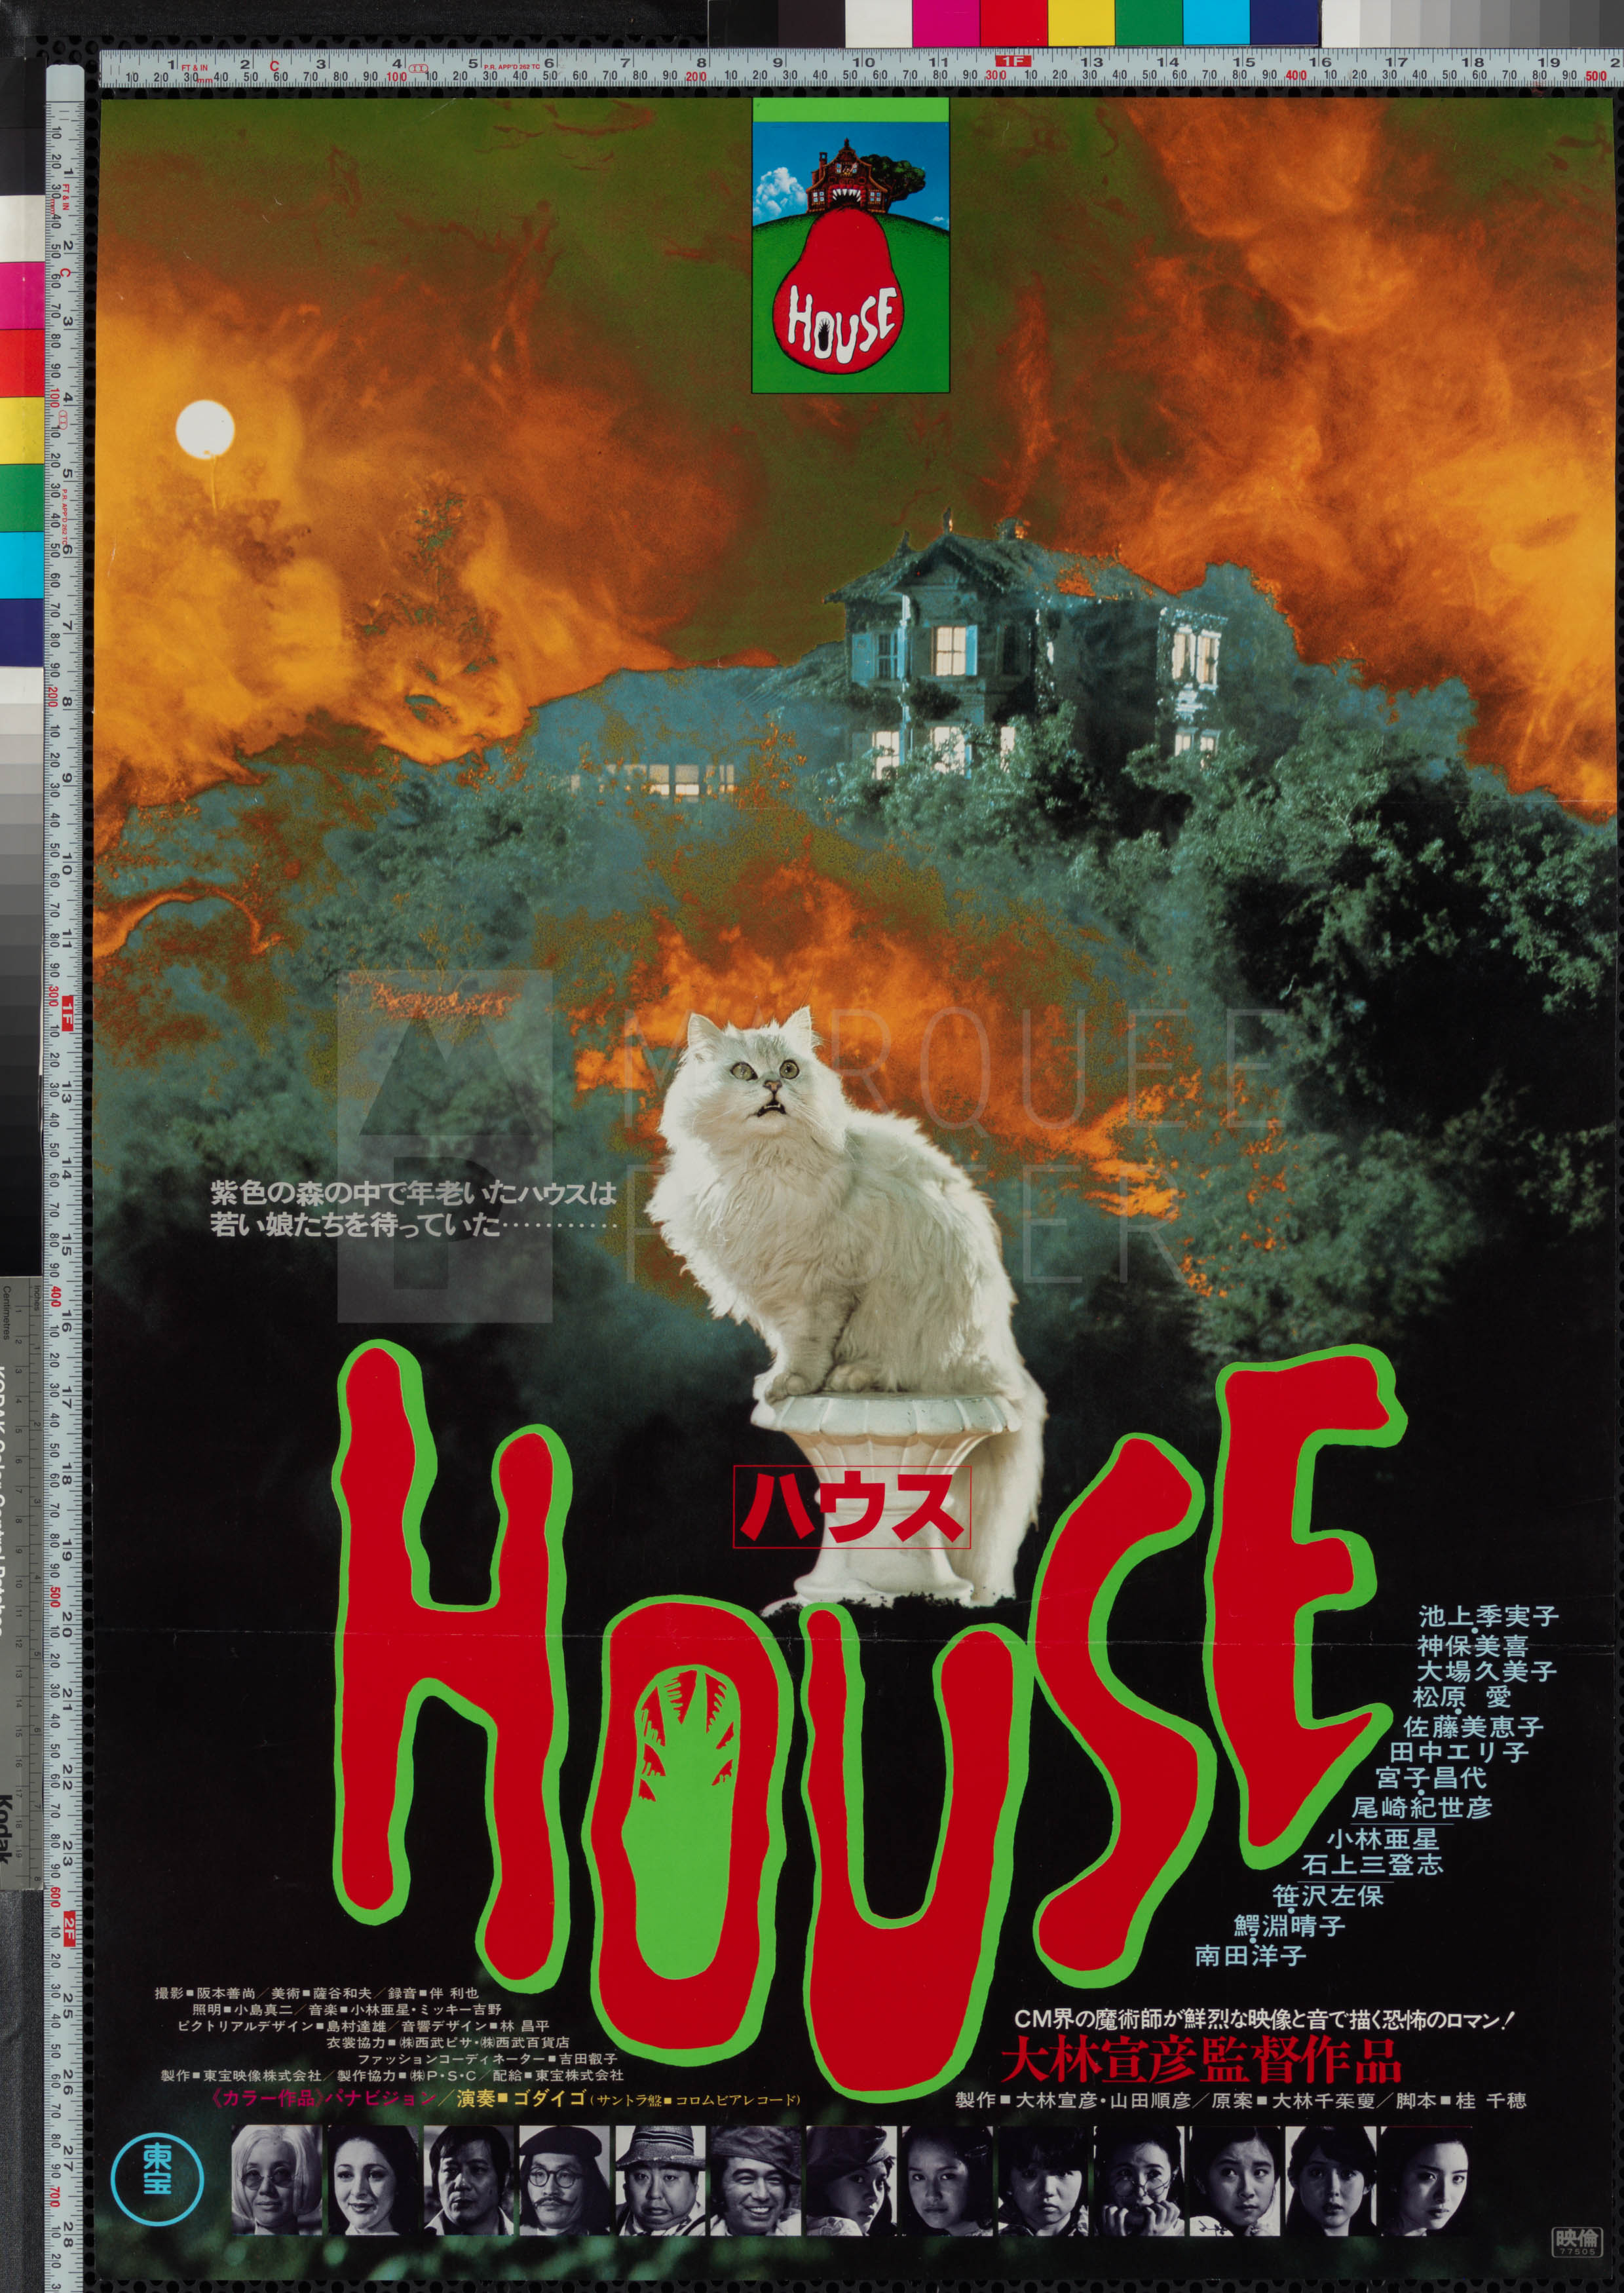 34-house-cat-style-japanese-b2-1977-02